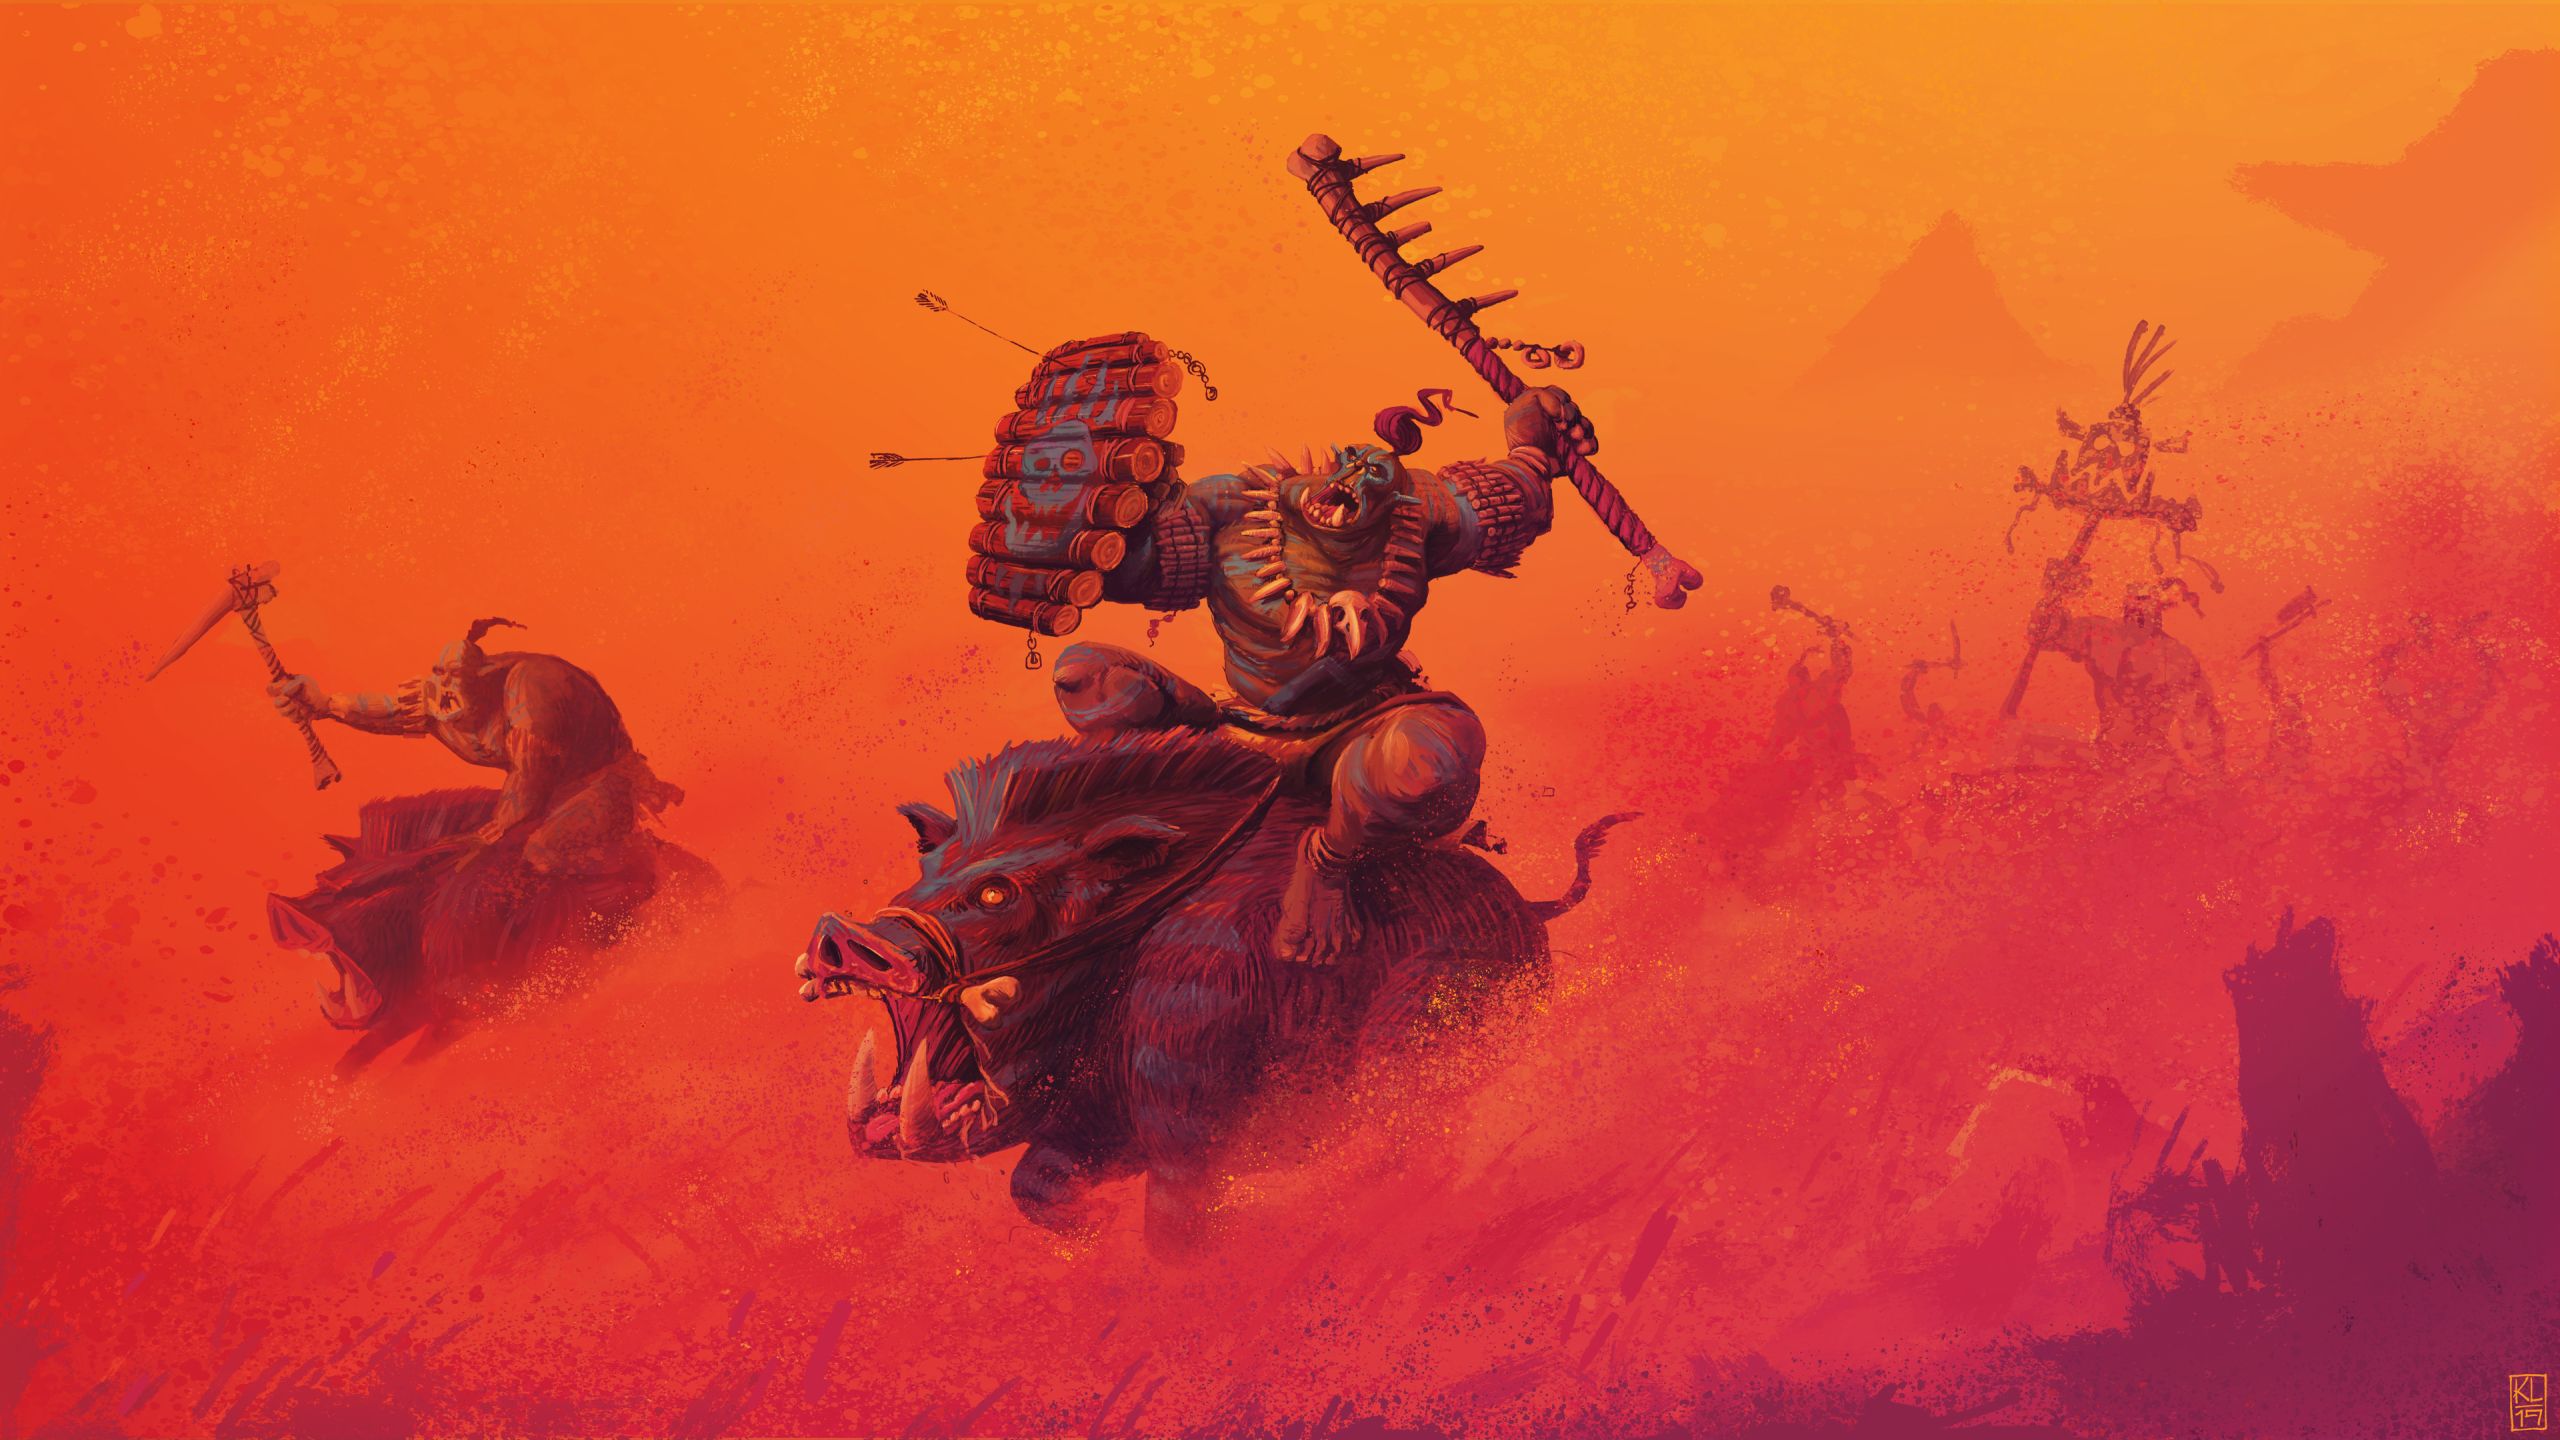 Total War Warhammer 2 1440P Resolution Wallpaper, HD Games 4K Wallpaper, Image, Photo and Background